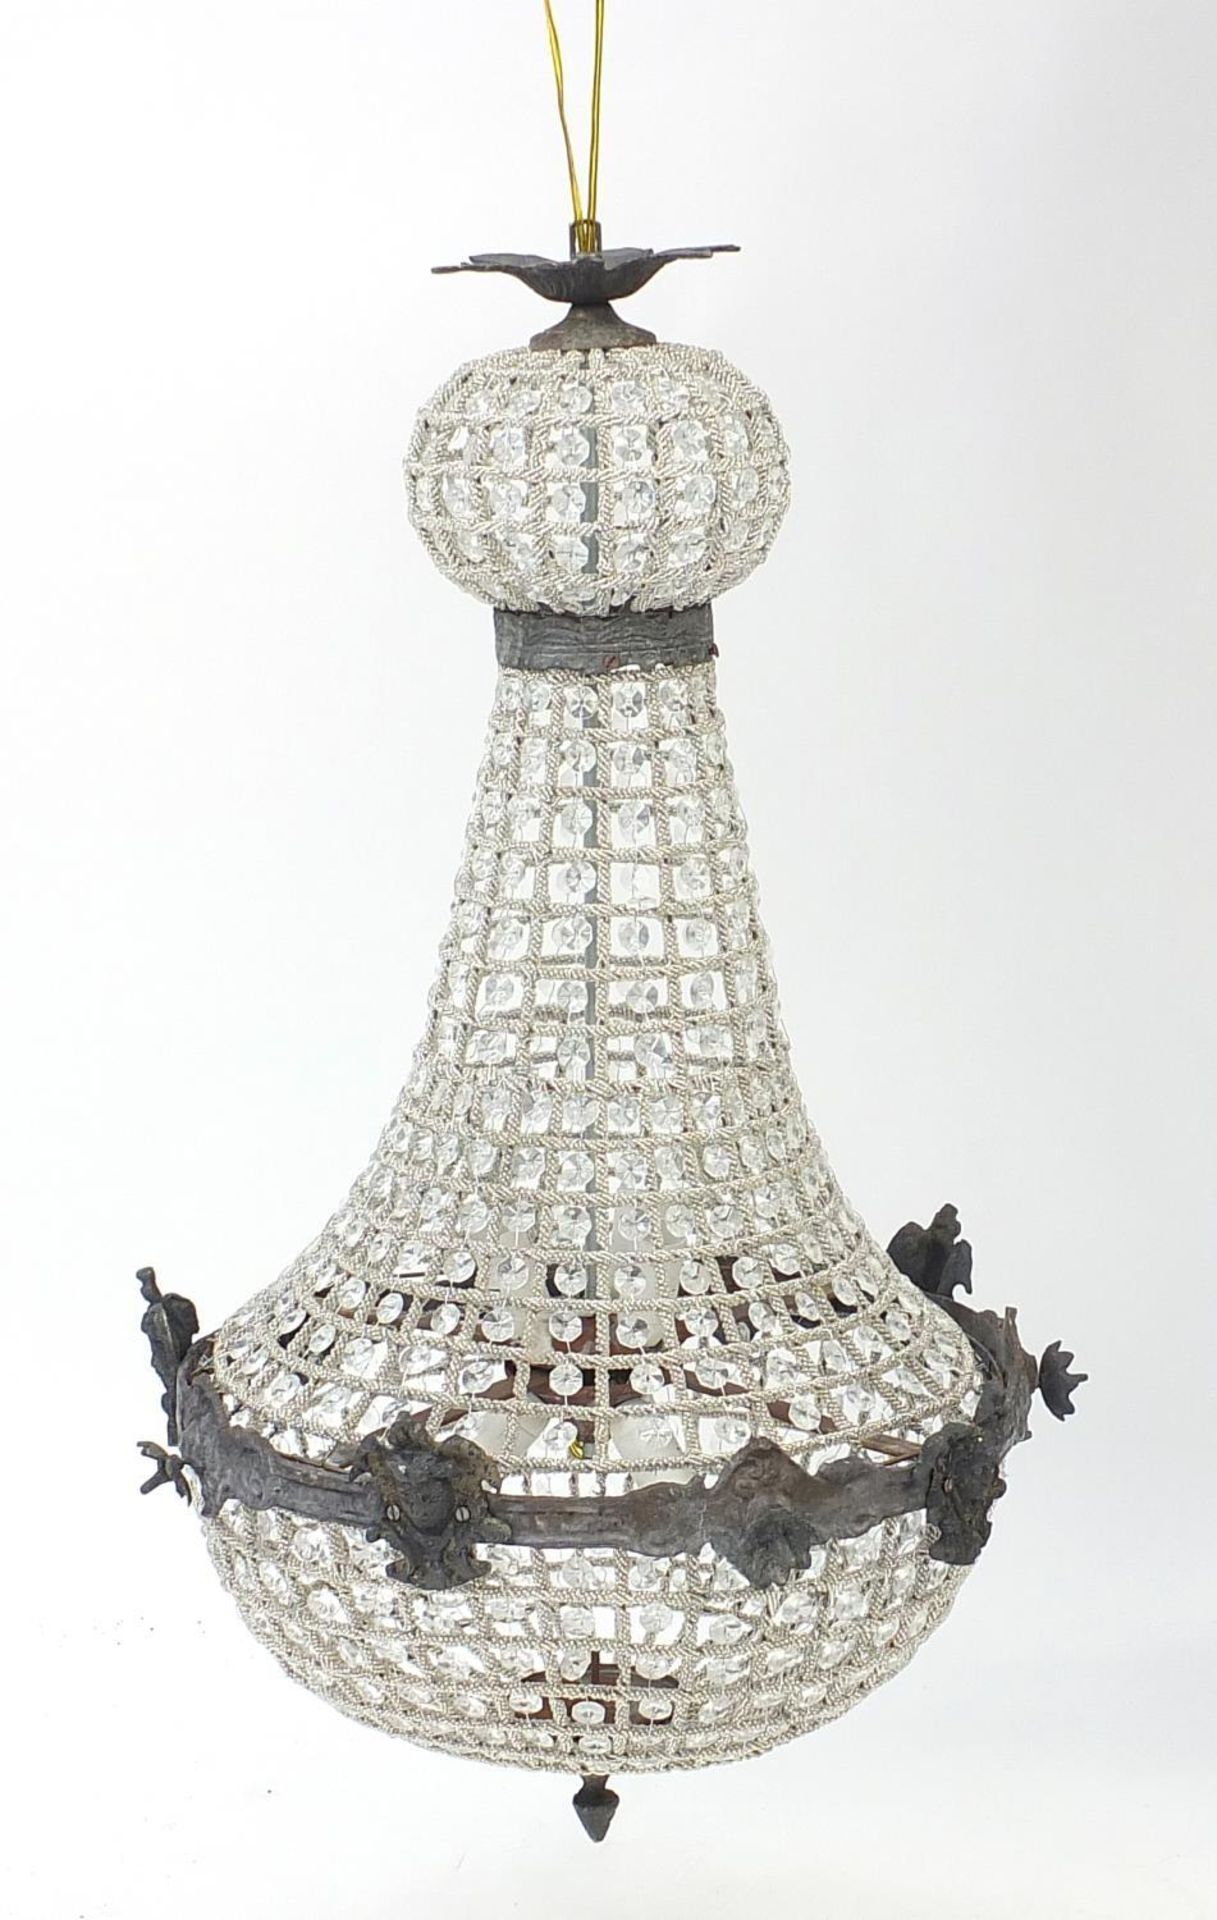 Large ornate chandelier with gilt metal mounts, 73cm high - Image 2 of 3